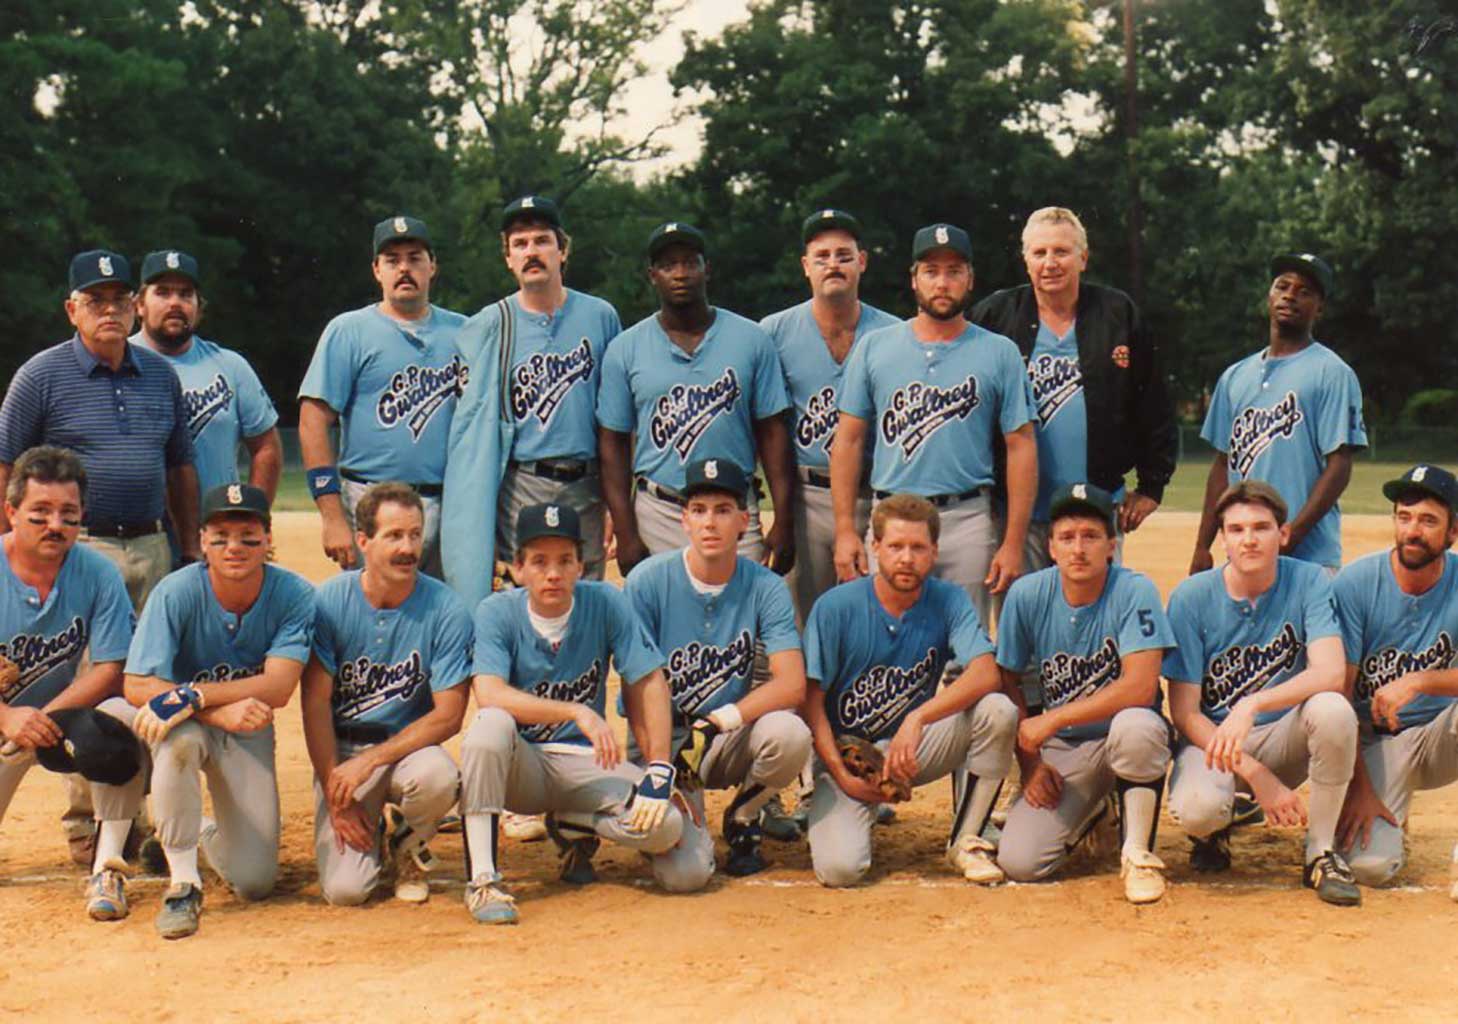 g.p.-gwaltney-fast-pitch-softball-team-1991-mgr-billy-whitley-img493